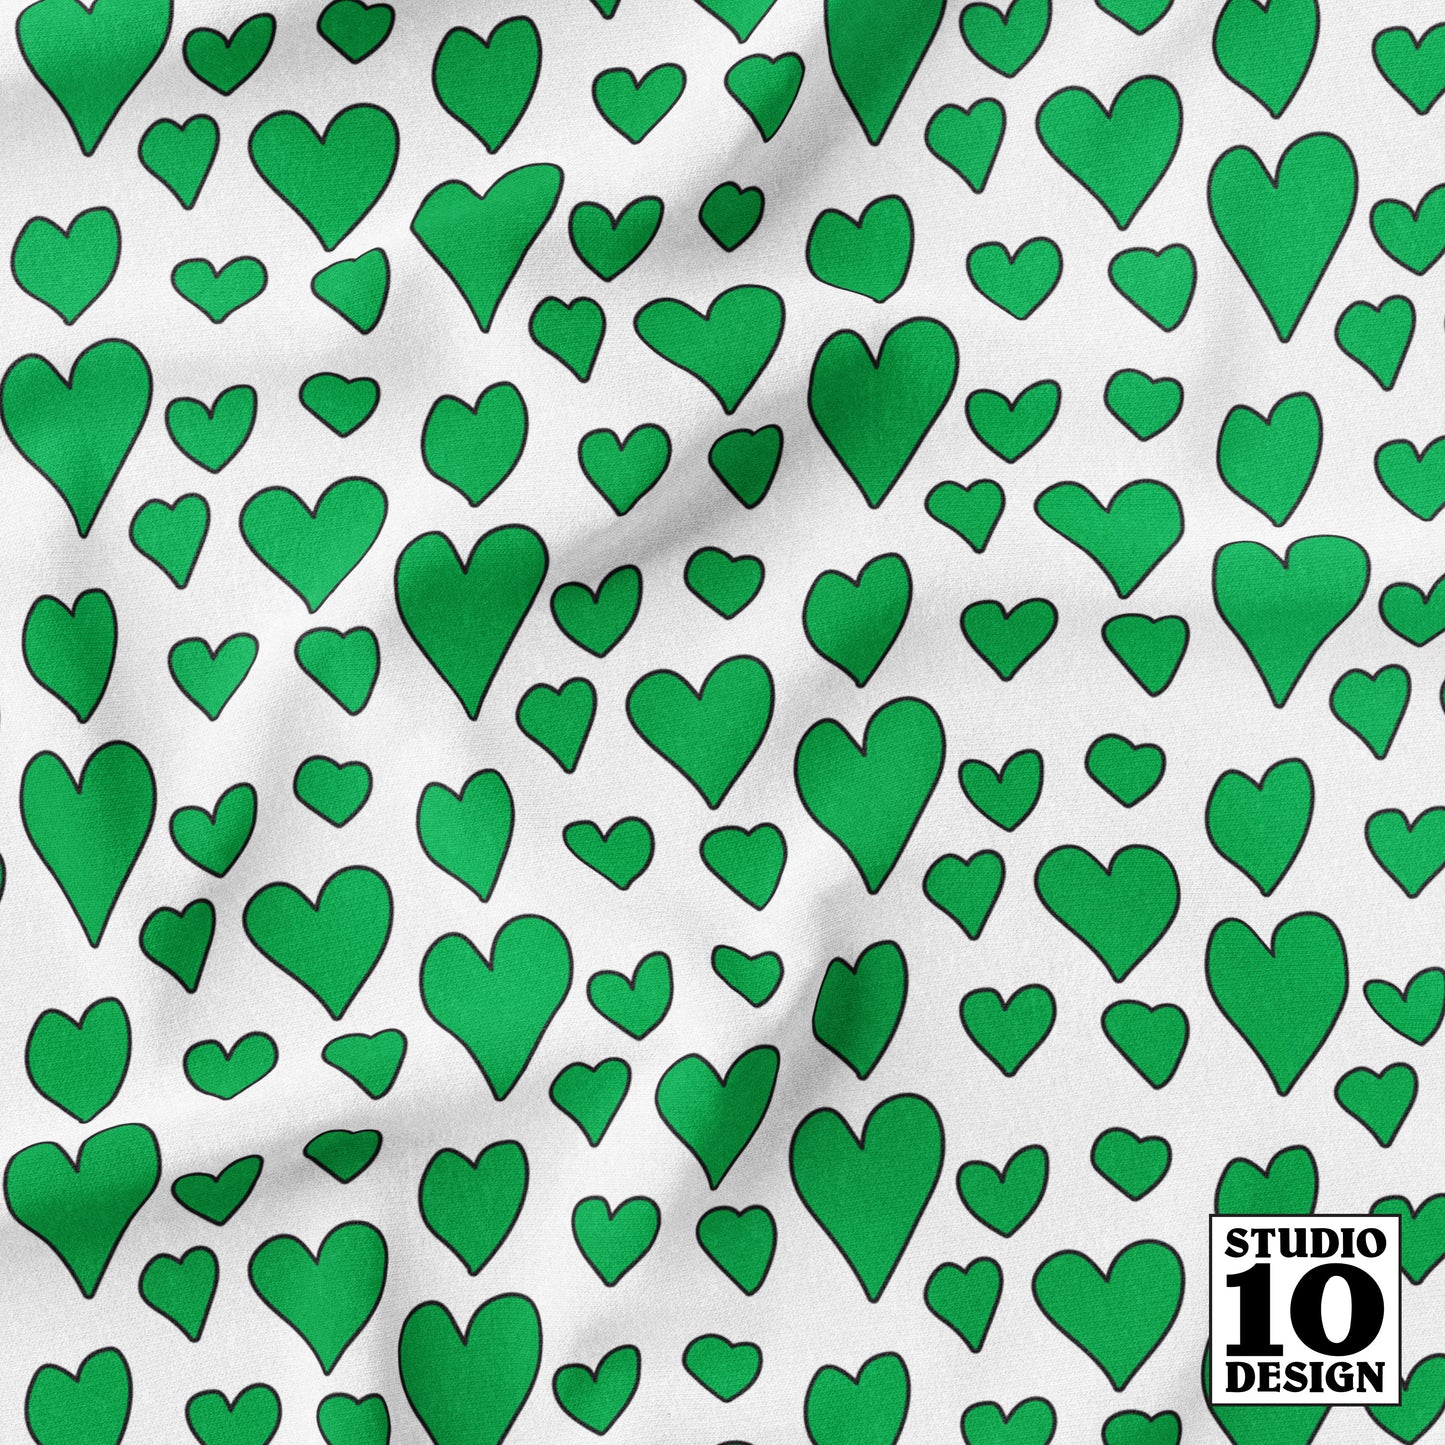 Rainbow Hearts Green+White Printed Fabric by Studio Ten Design